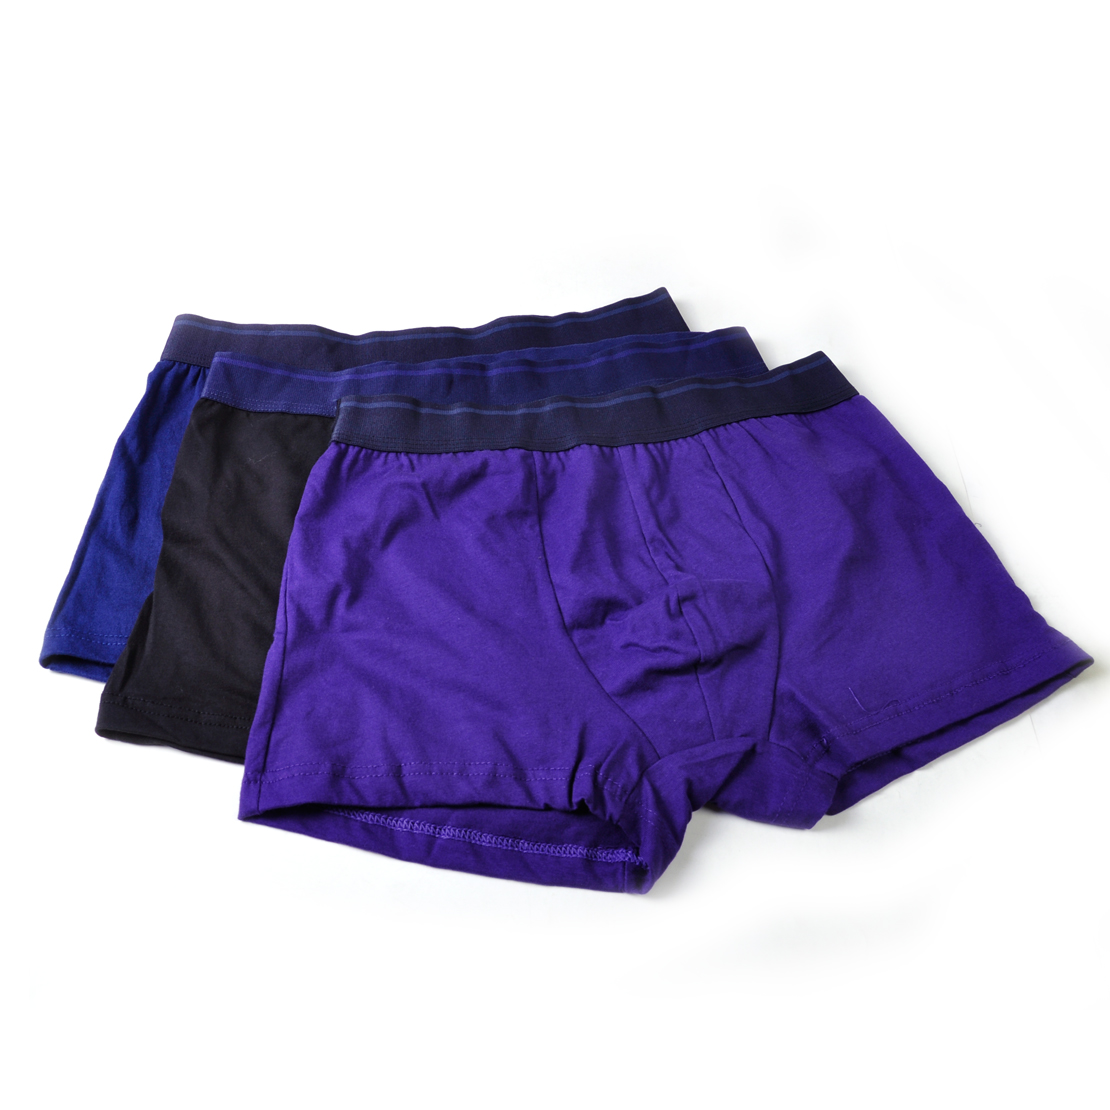 Men Soft Underwear Sexy Boxer Briefs Shorts Bulge Trunks Underpants Knickers Ebay 6252